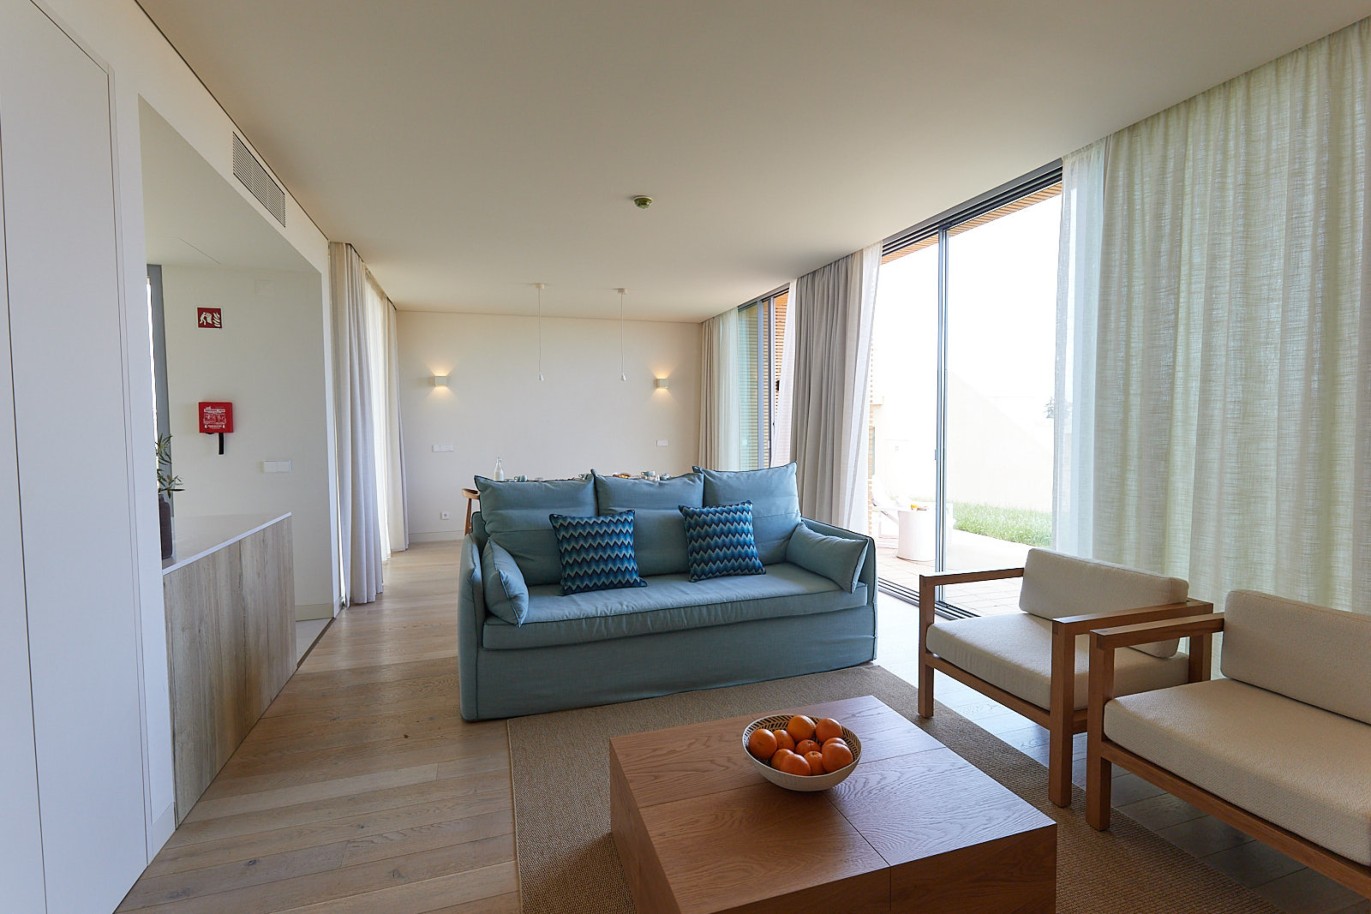 2 bedroom apartment in resort, for sale in Porches, Algarve_229216